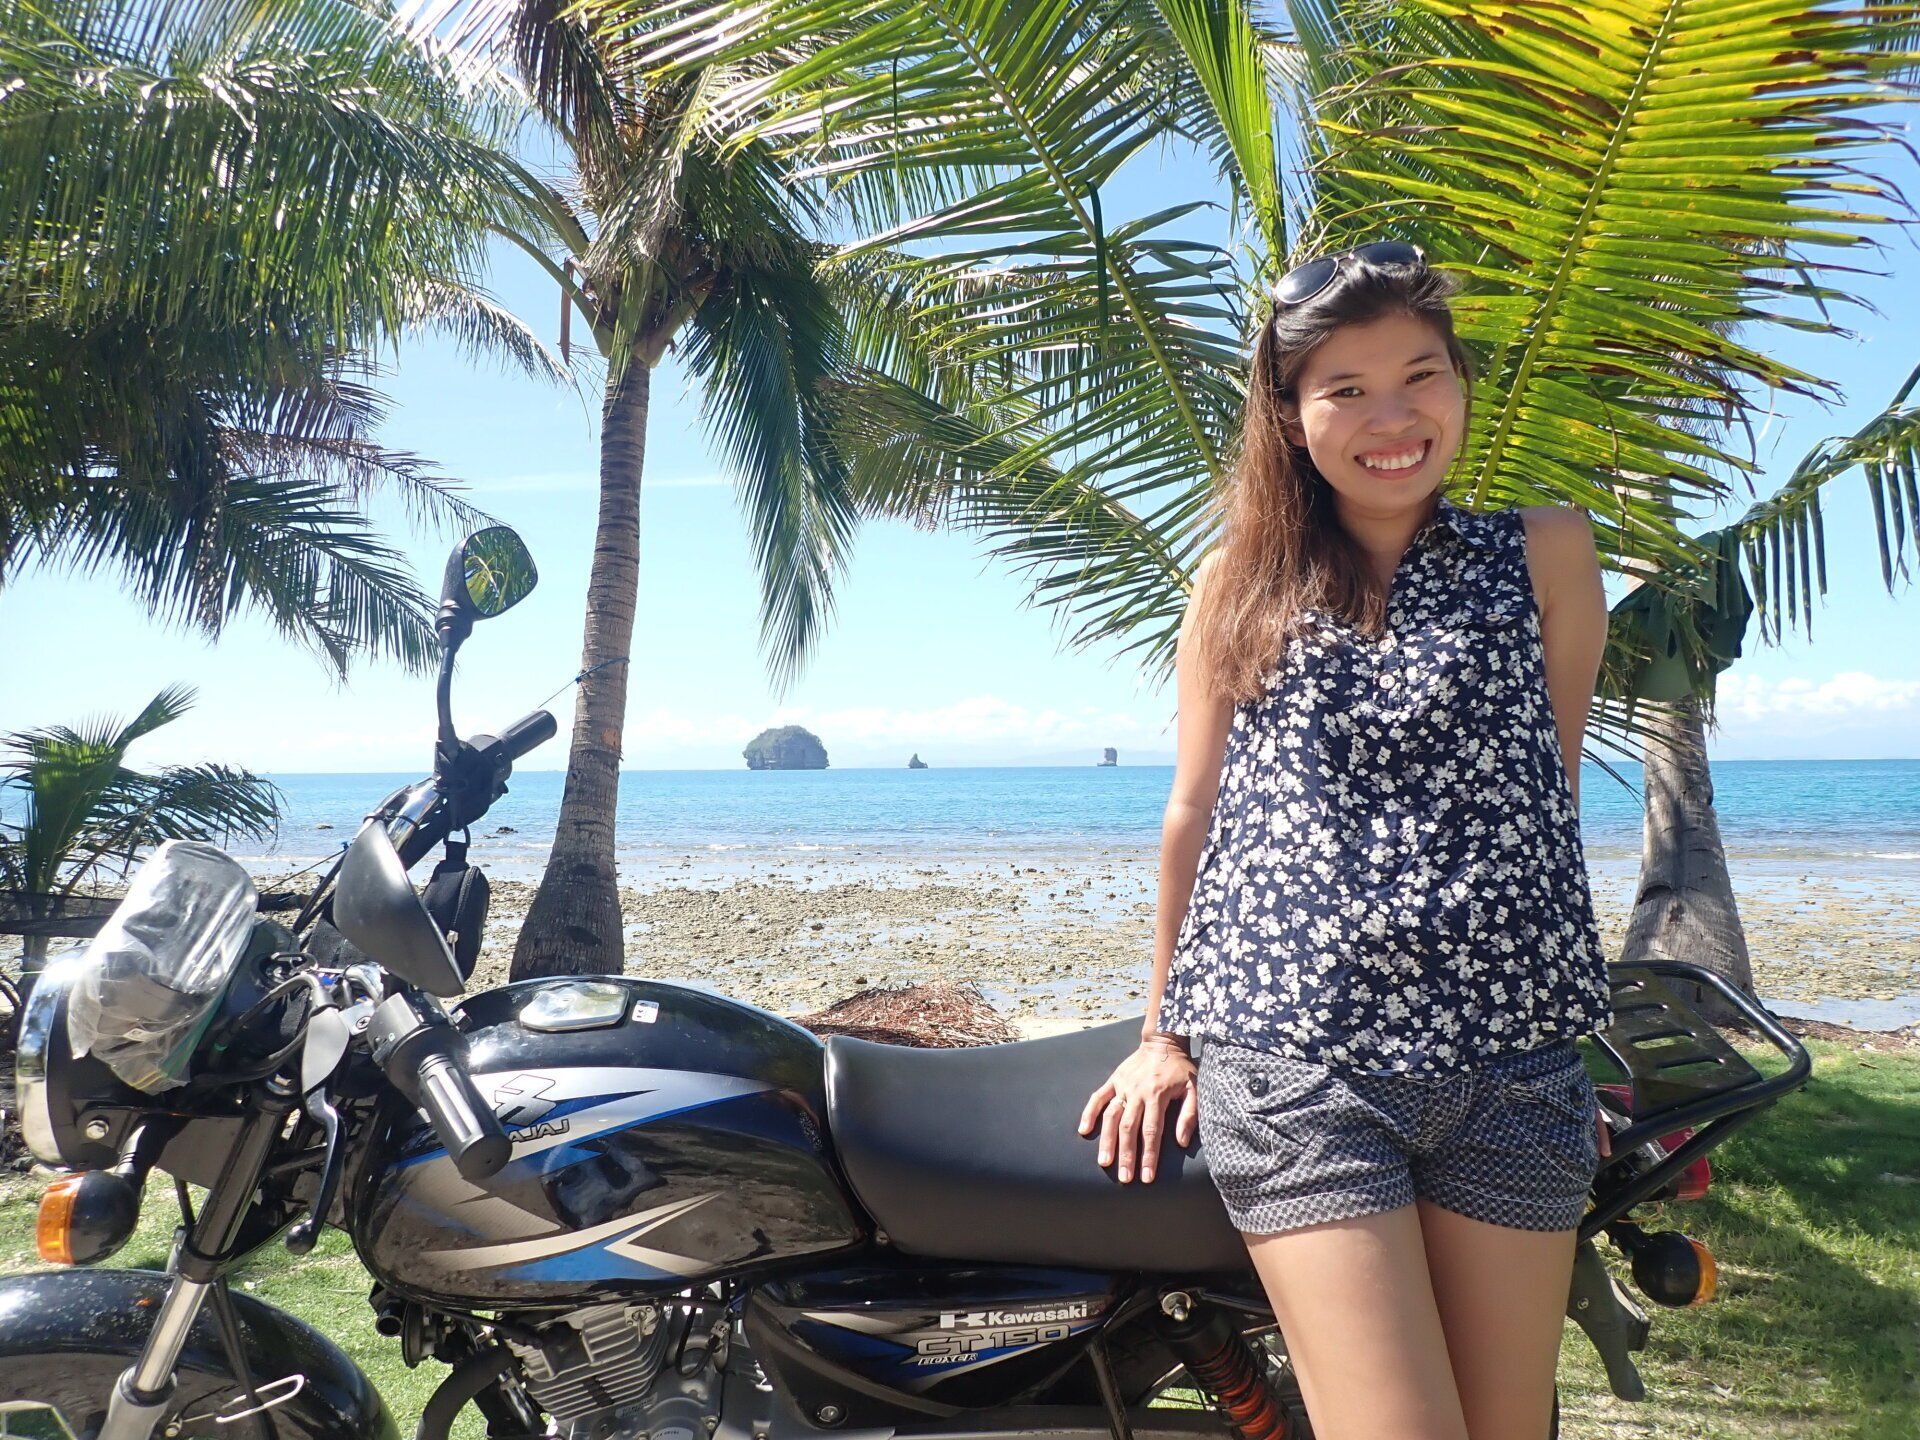 Cebu Bohol Motorbike Tour / Philippines